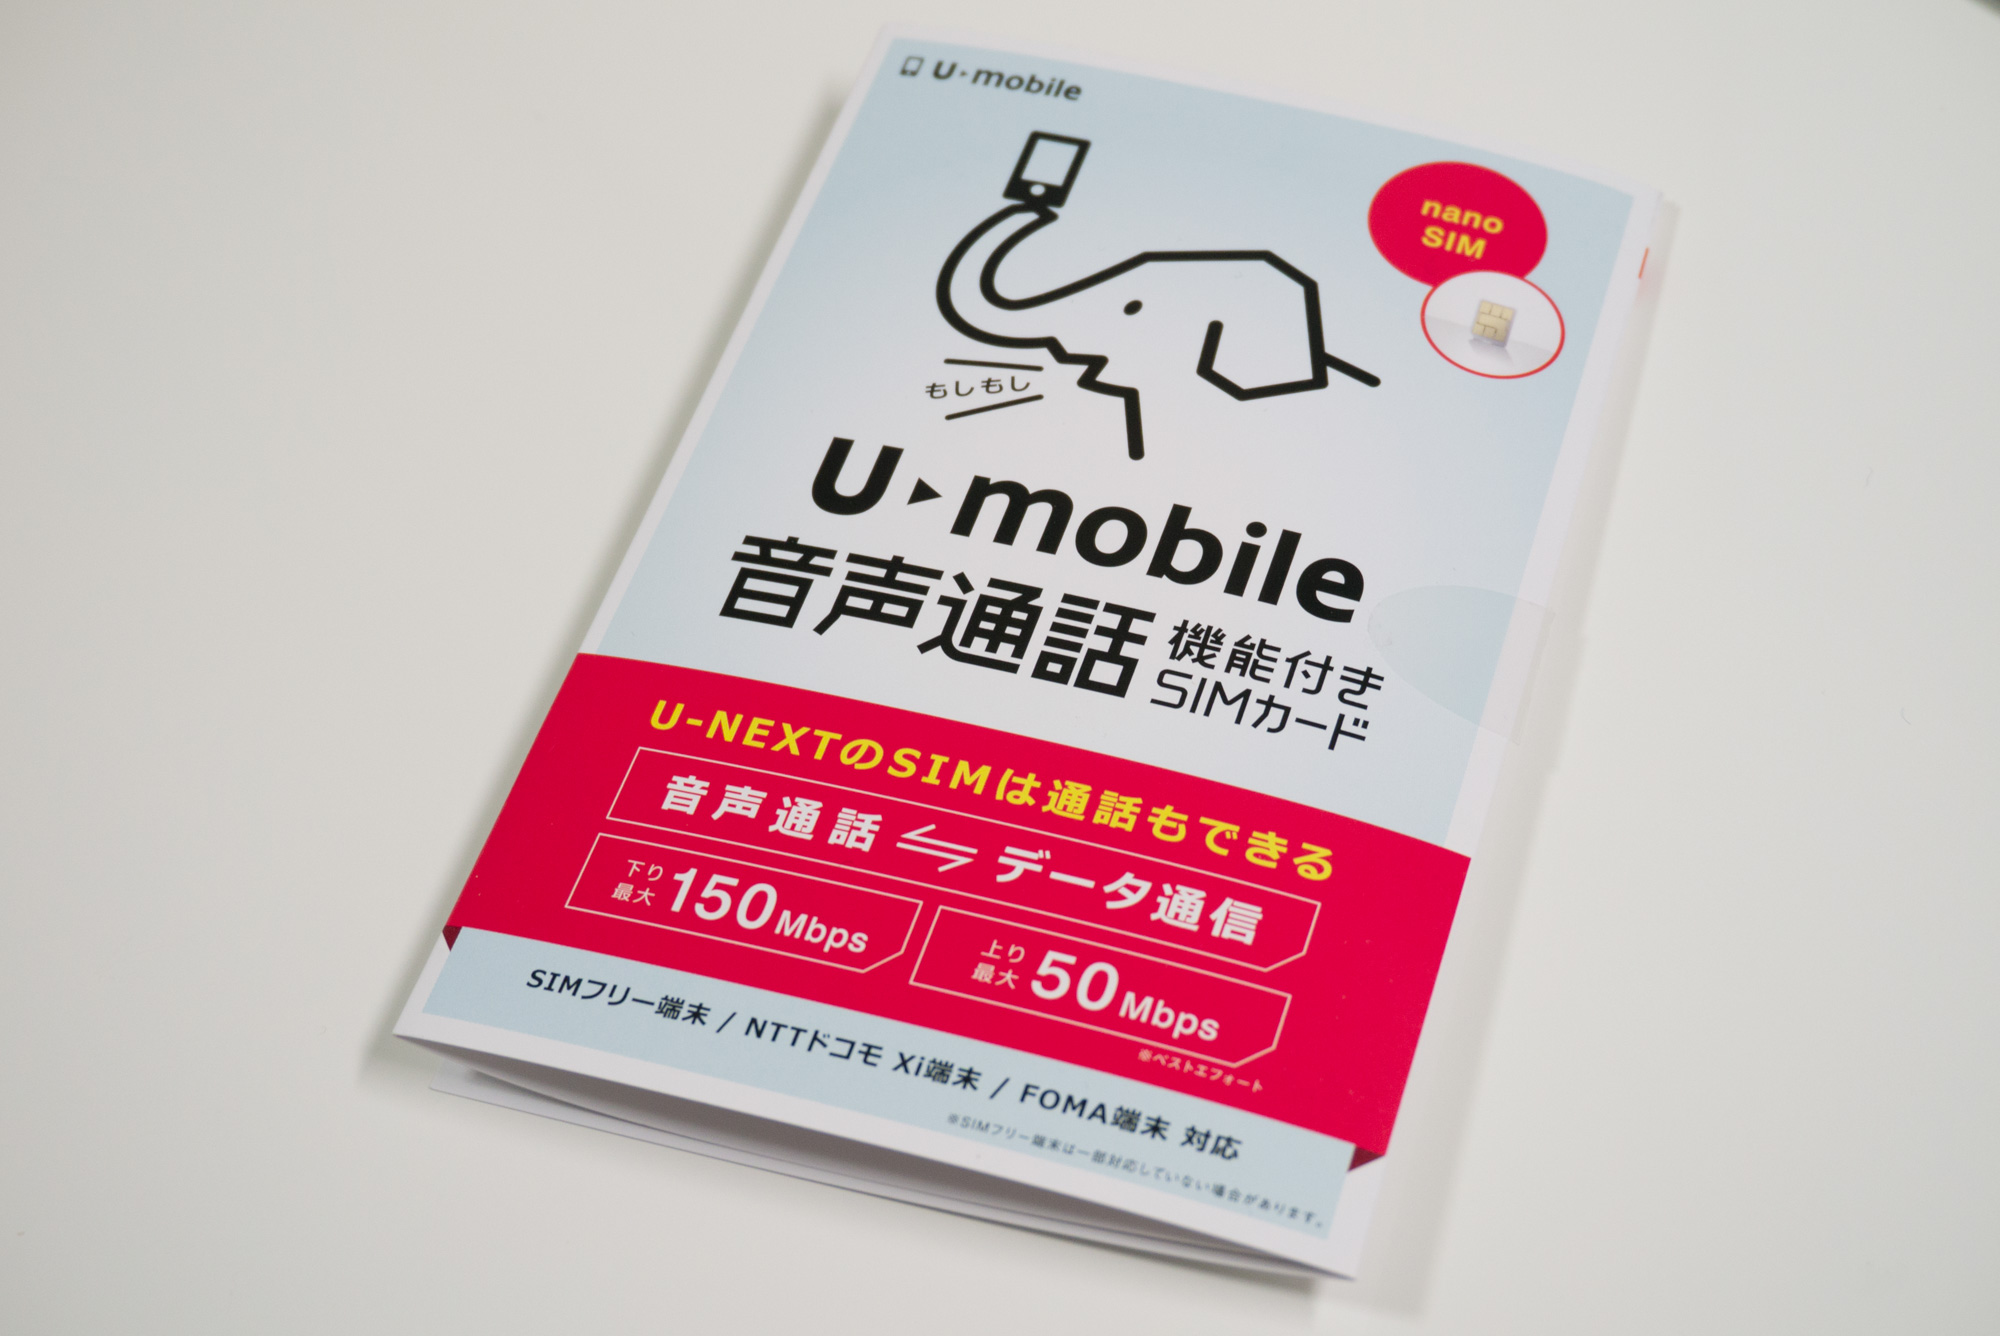 u-mobile